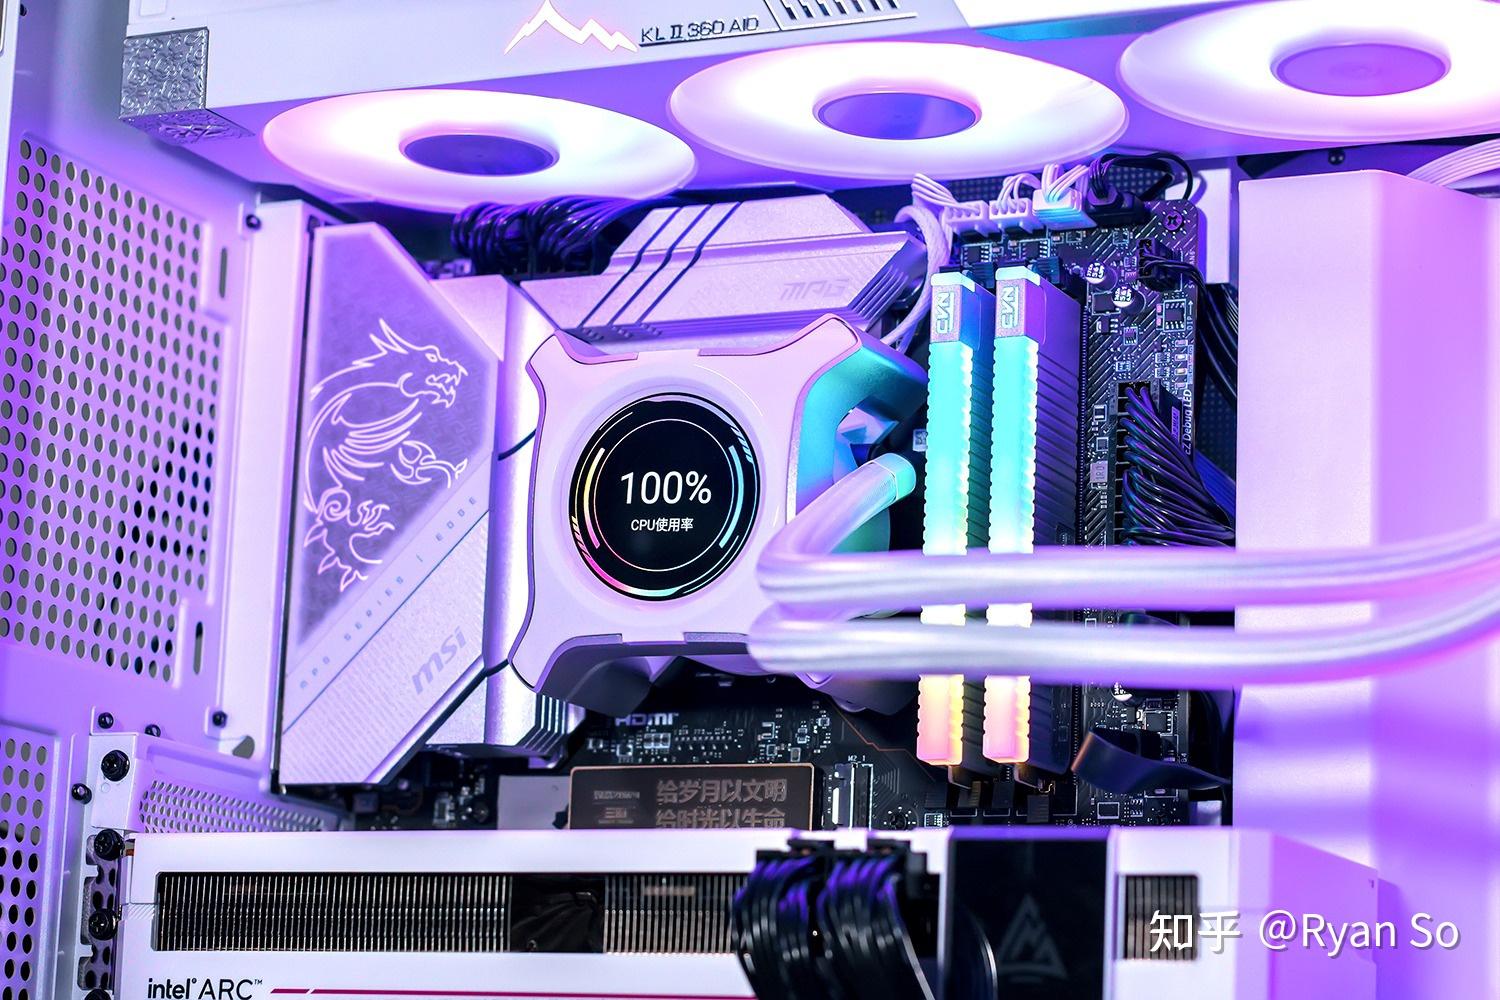 NVIDIA GTX 760 vs AMD显卡：性能、价格、功耗、散热全方位对比  第1张